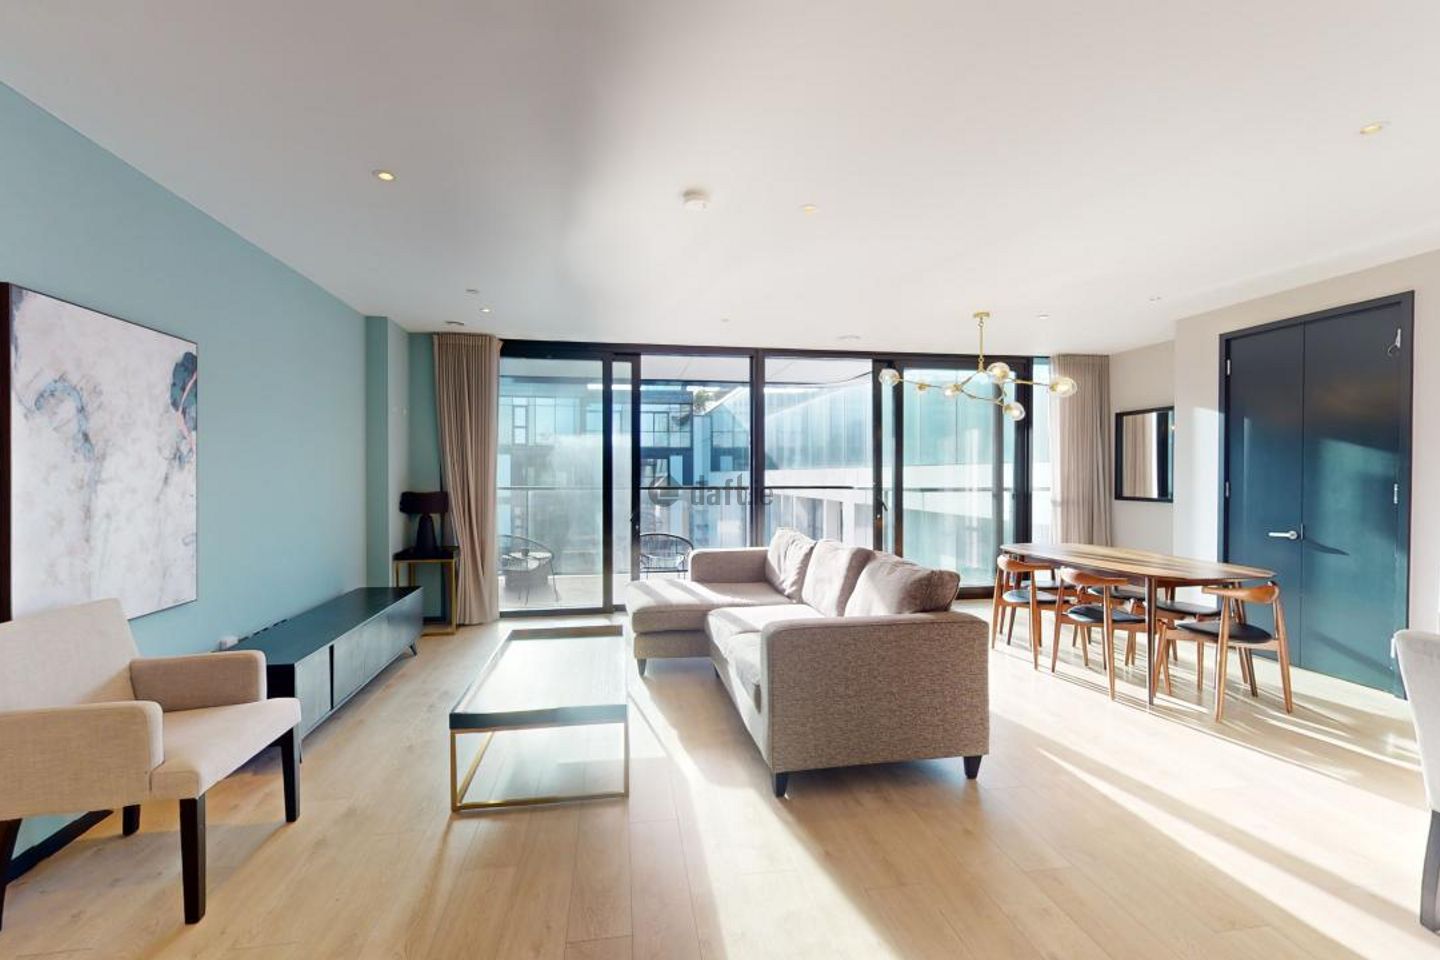 3-Bed Apartment with roof garden, Opus, 6 Hanover Quay, Hanover Quay, Dublin 2